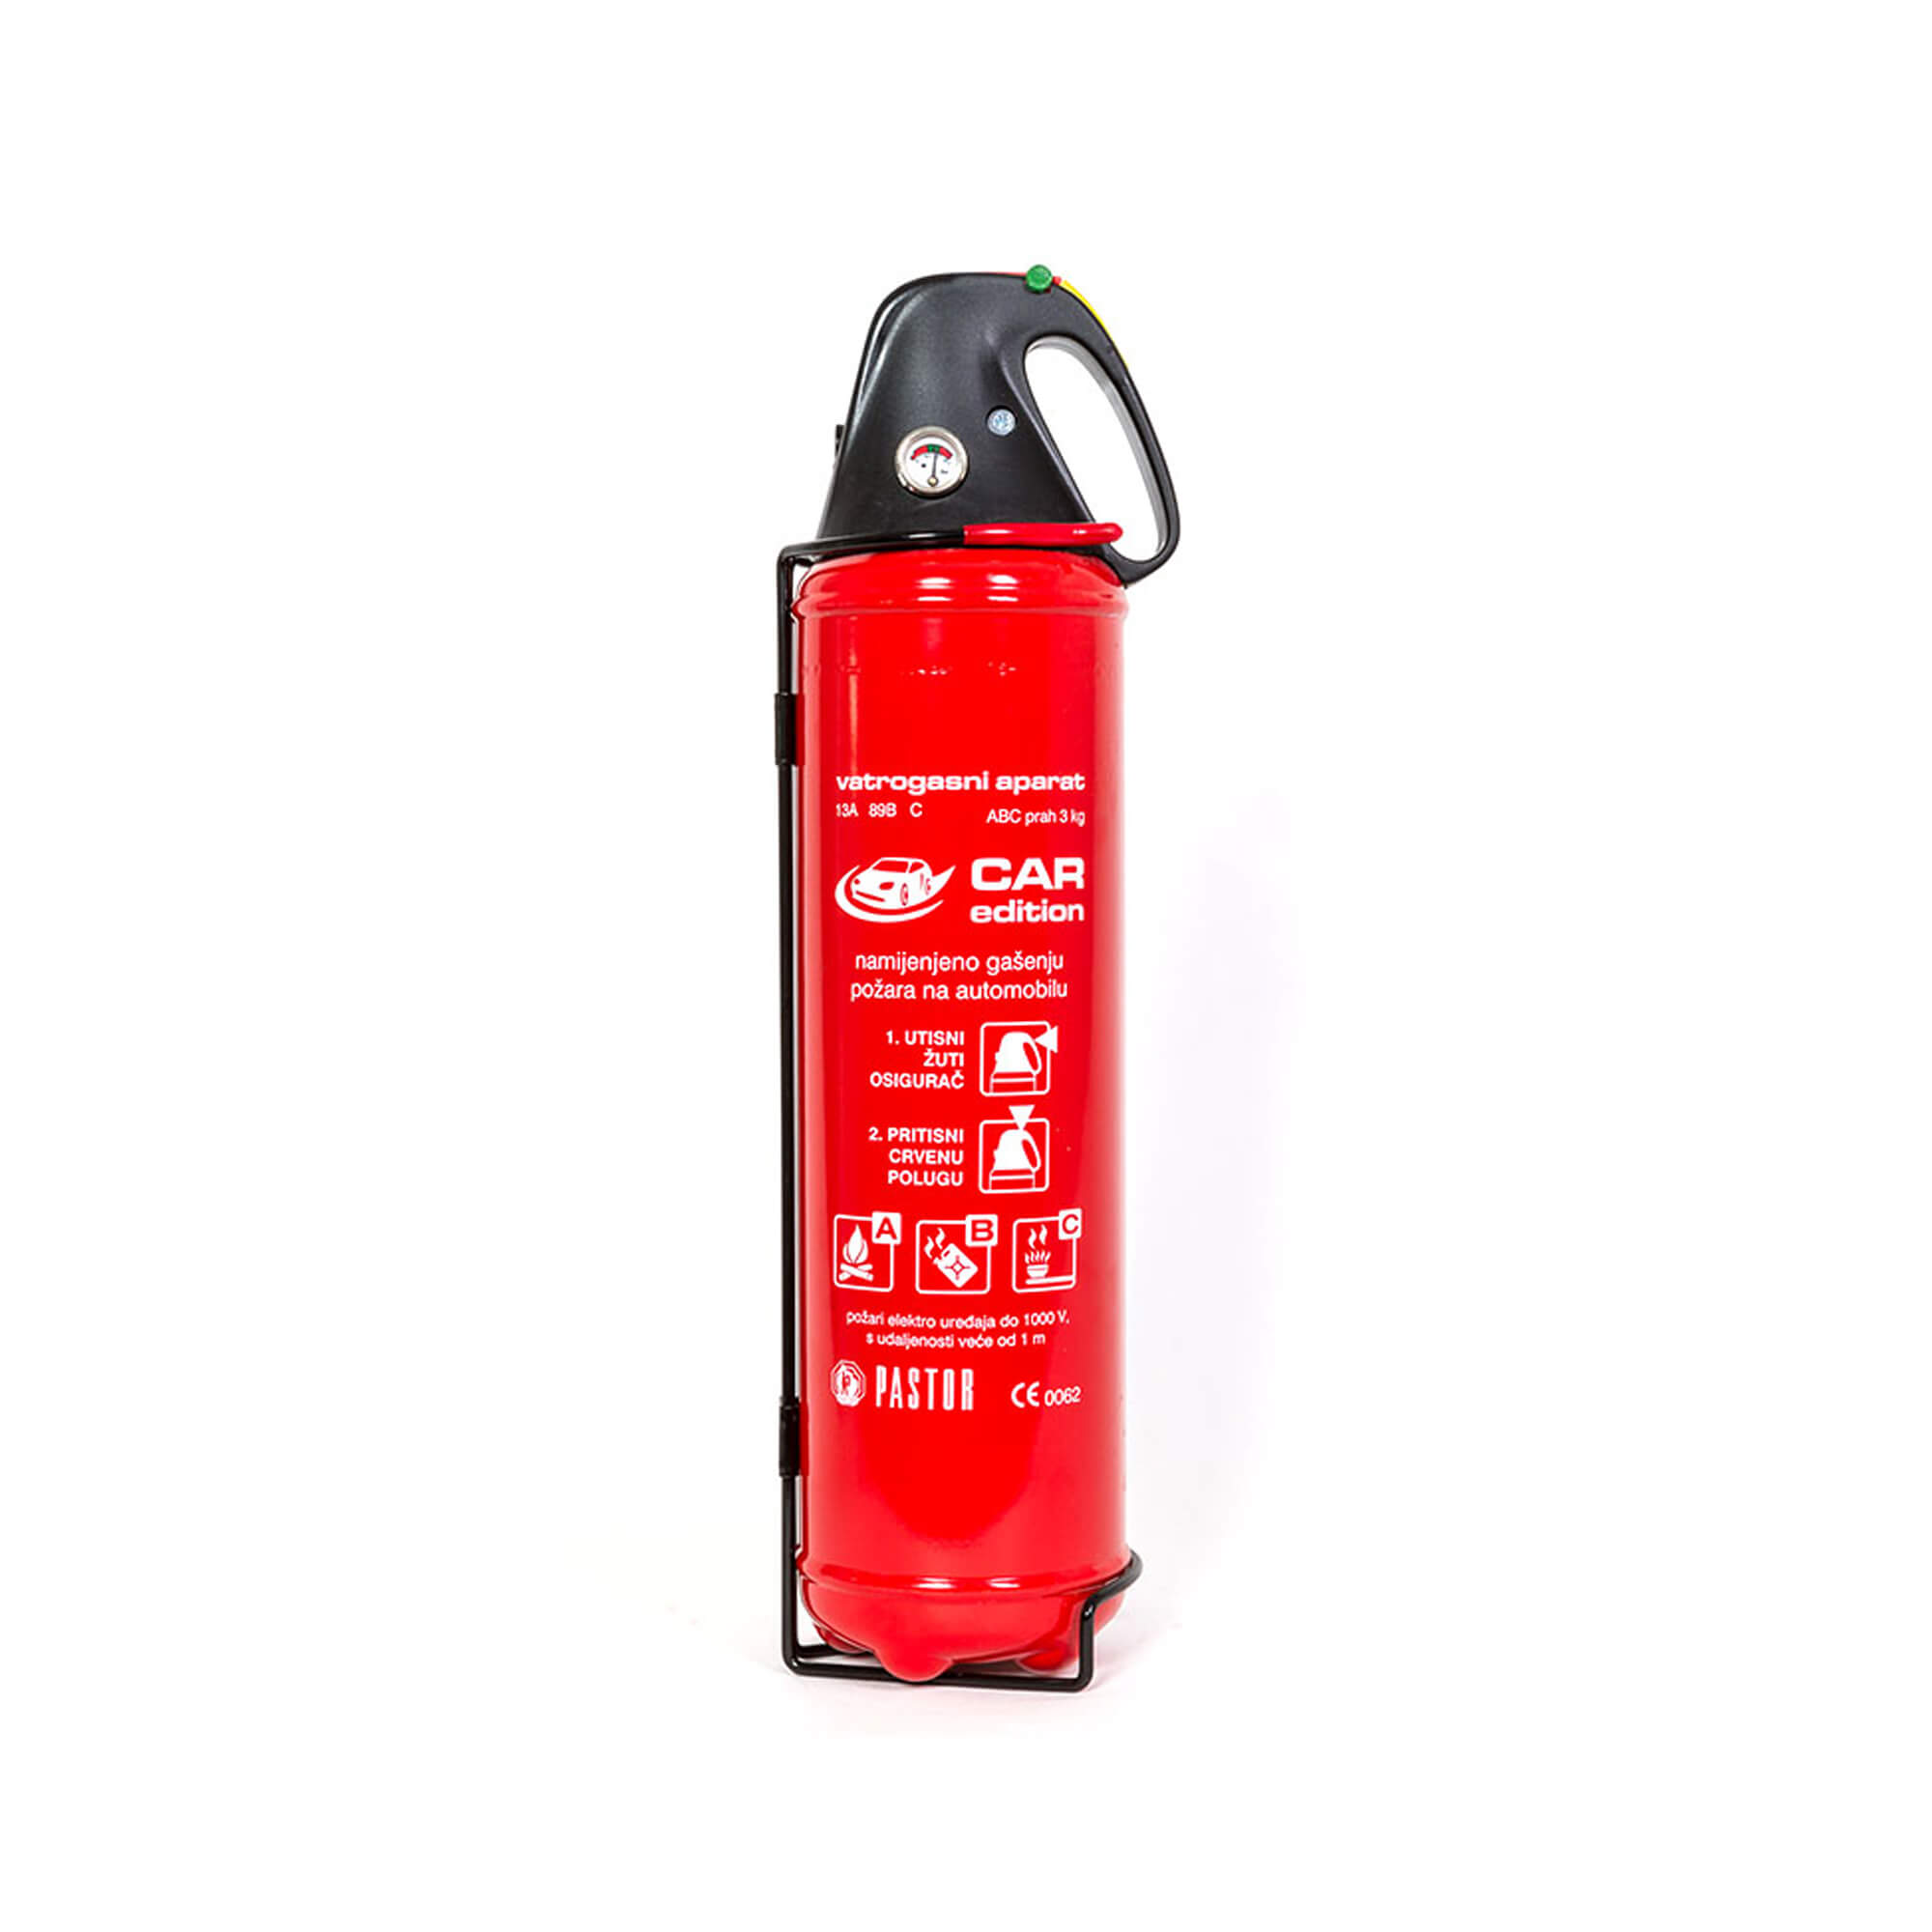 [20993] Pastor Fire Extinguisher Dry Powder, Stored Pressure 3kg Car Edition image